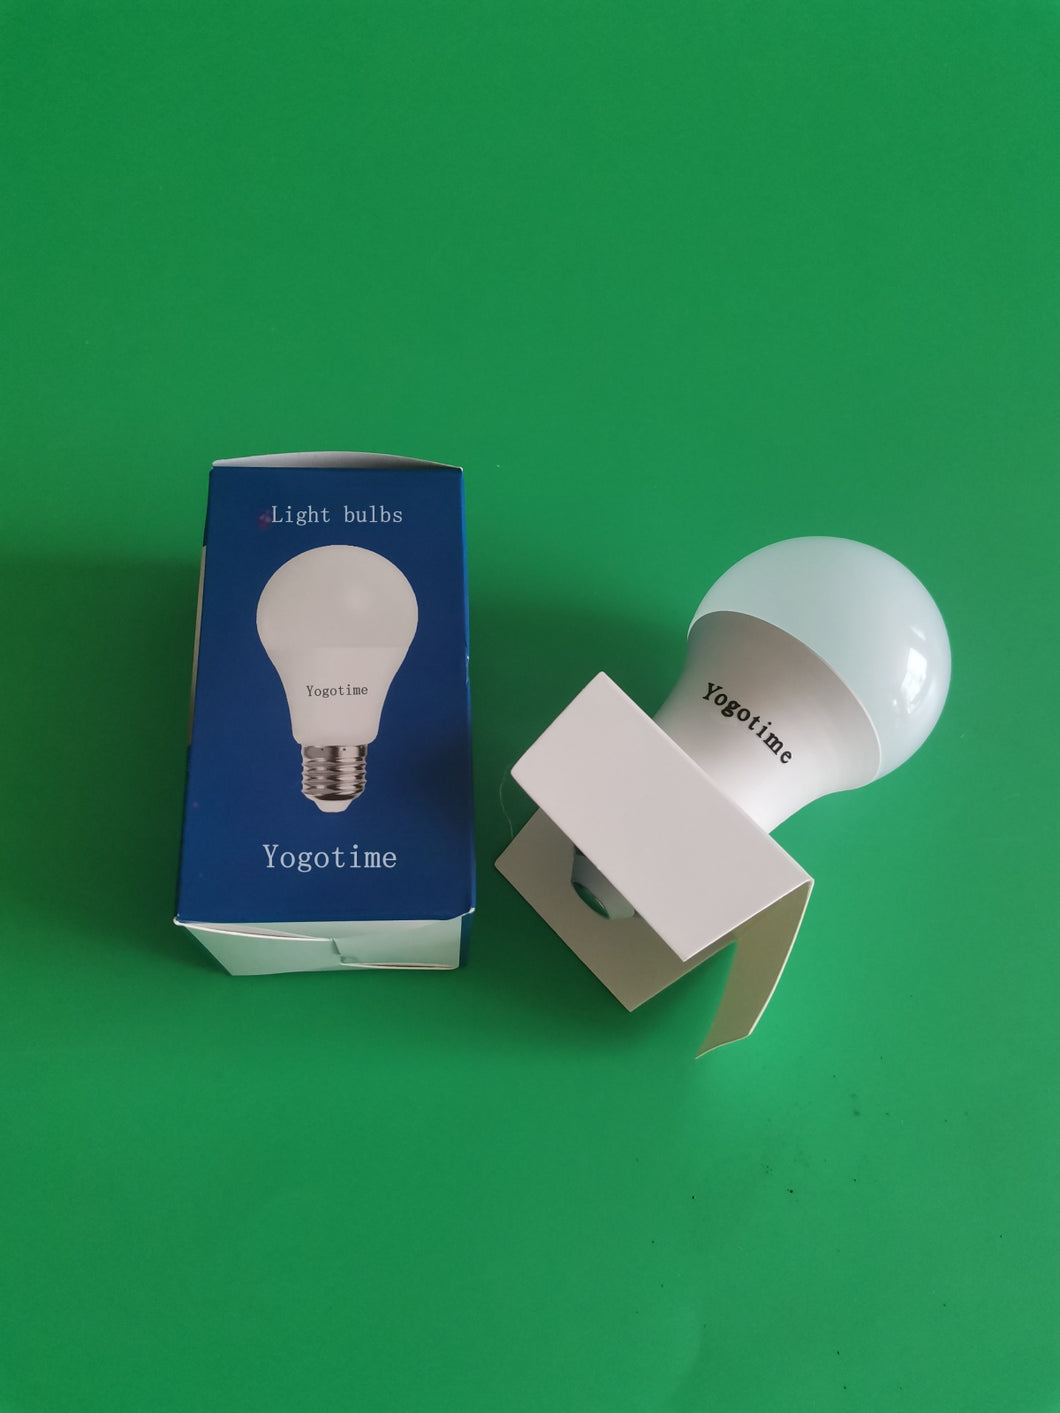 Yogotime Light bulbs, easy to install, environmentally friendly, zero glare